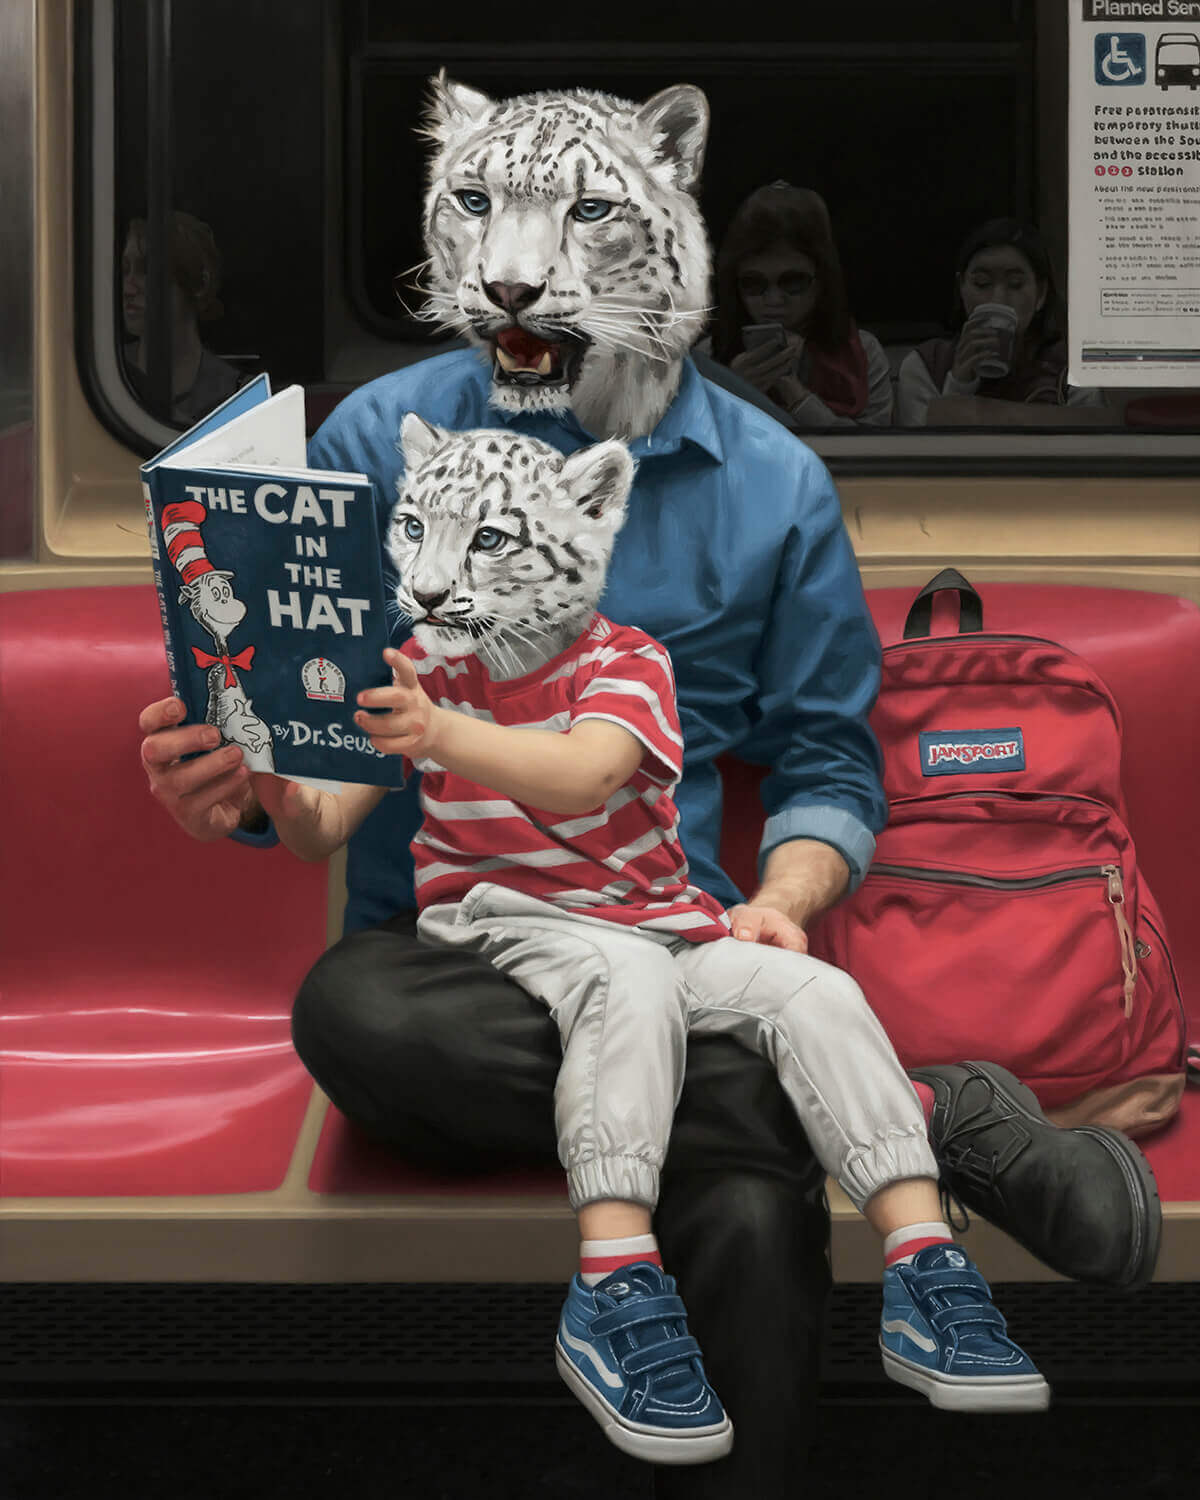 Half-human half-animal on the New York Subway